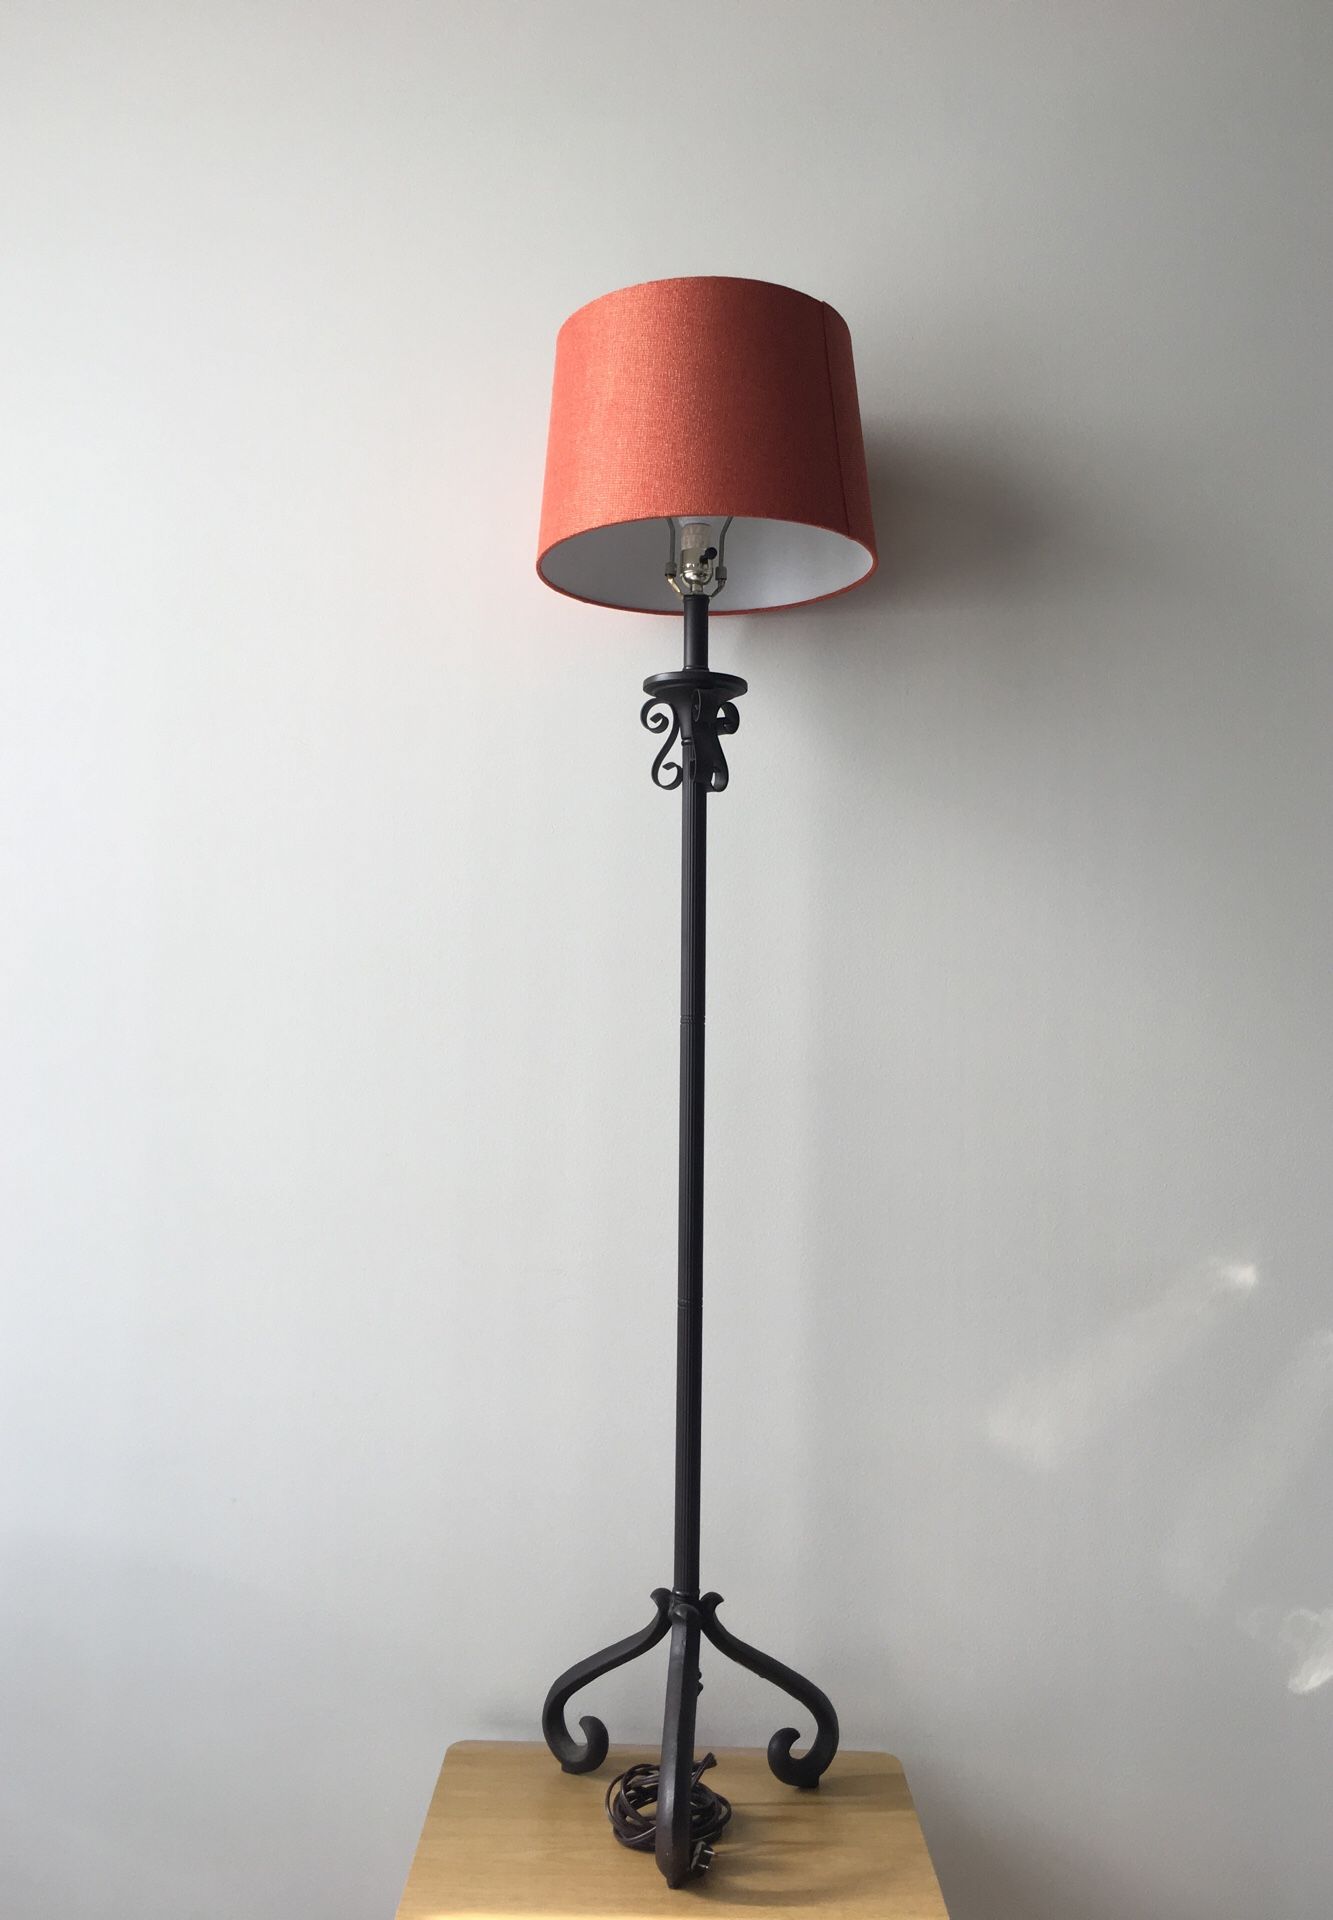 Floor lamp with orange lamp shade (5 Foot)